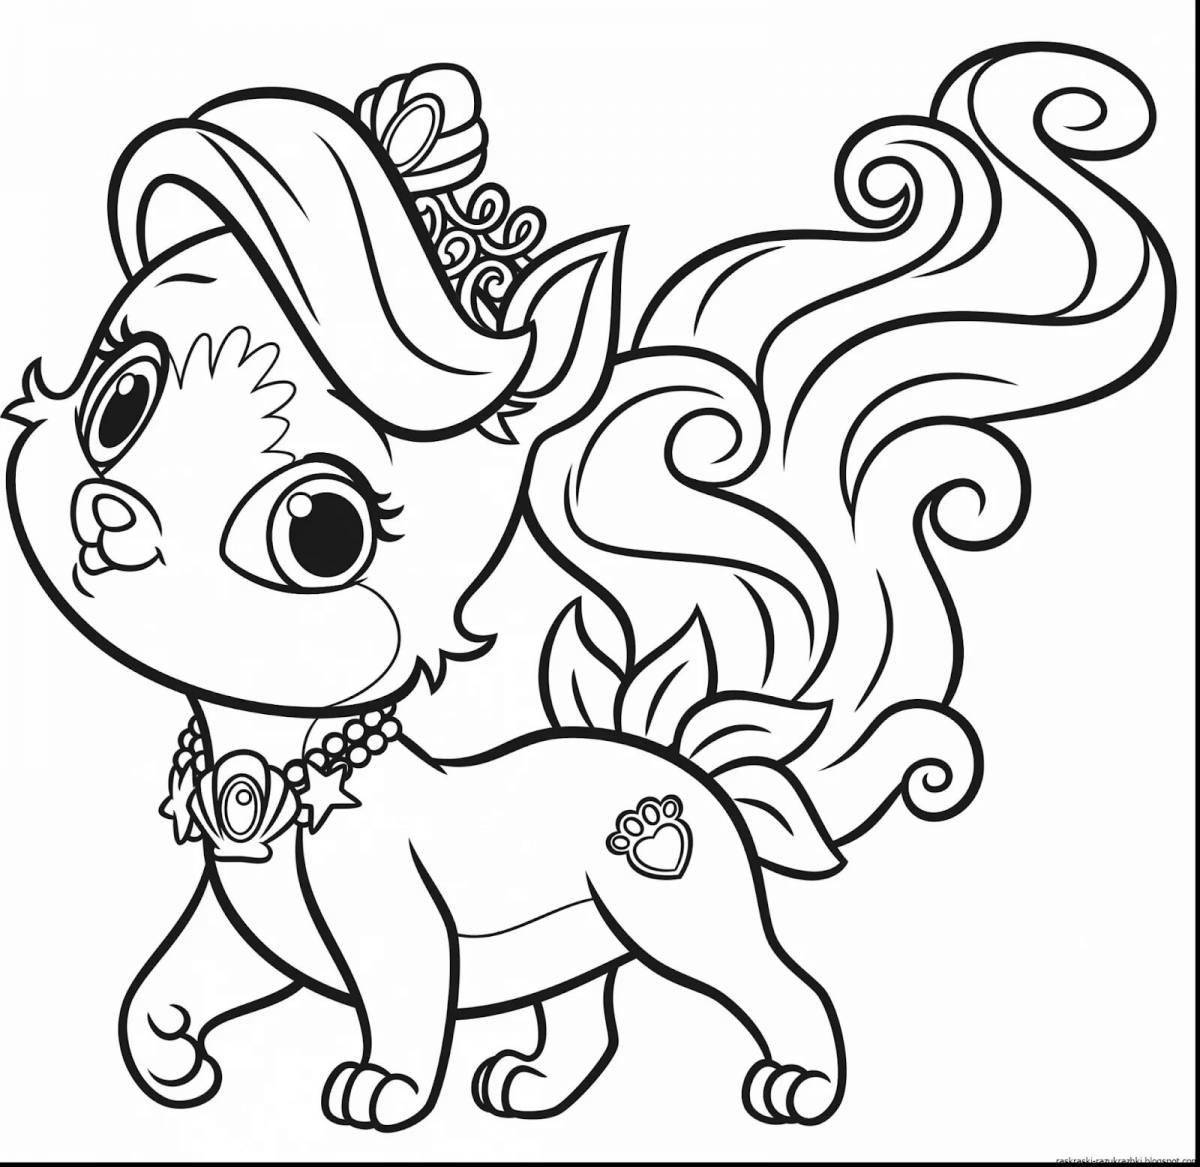 Fun coloring princess with a dog